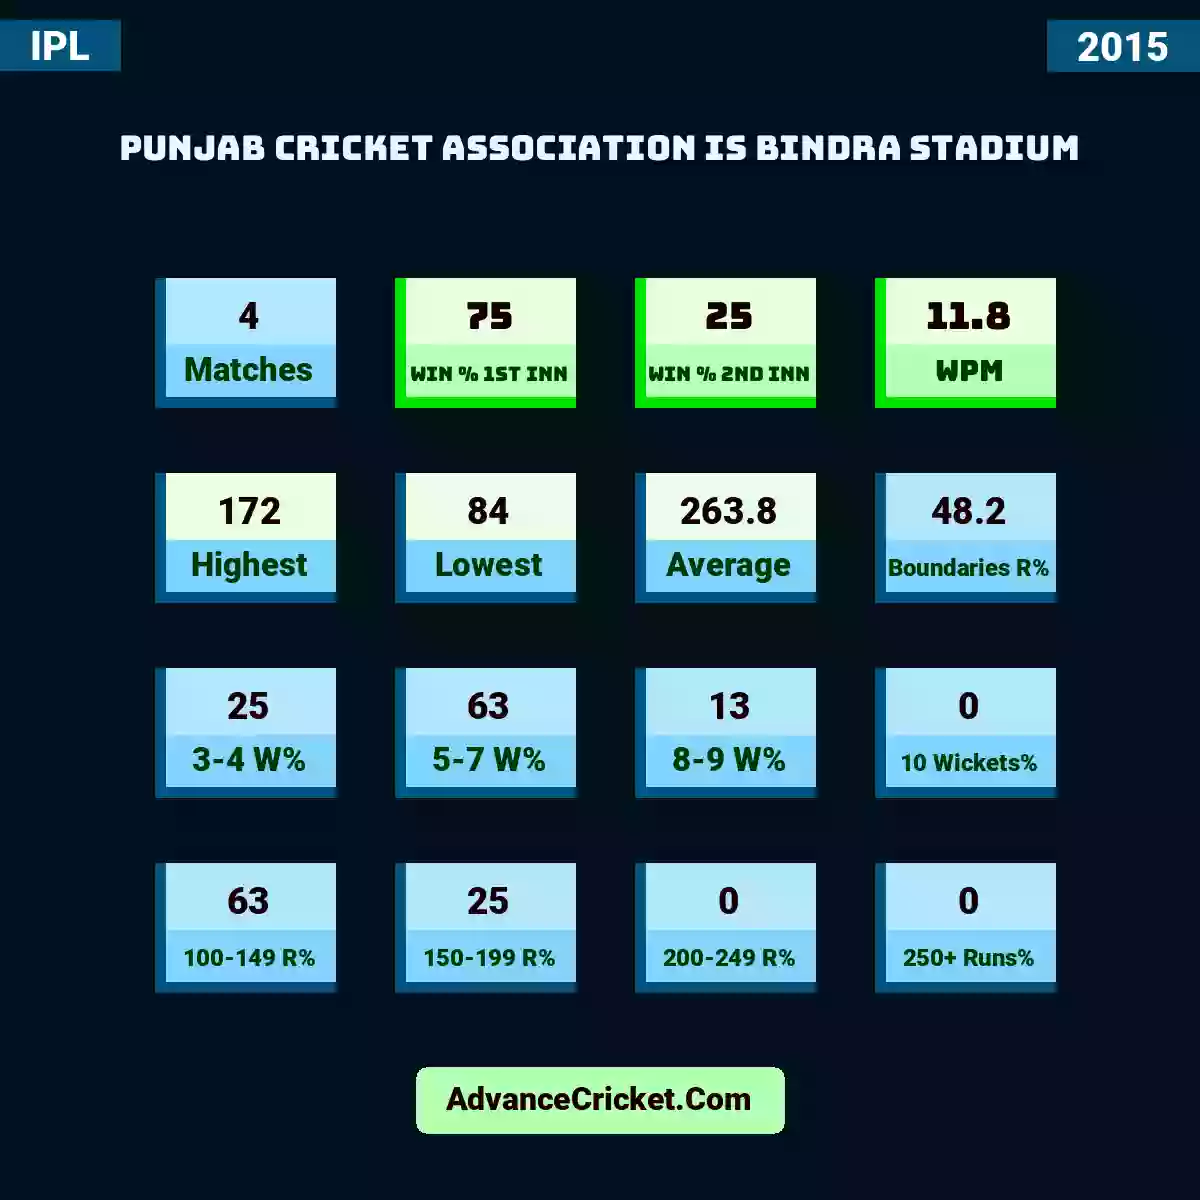 Image showing Punjab Cricket Association IS Bindra Stadium with Matches: 4, Win % 1st Inn: 75, Win % 2nd Inn: 25, WPM: 11.8, Highest: 172, Lowest: 84, Average: 263.8, Boundaries R%: 48.2, 3-4 W%: 25, 5-7 W%: 63, 8-9 W%: 13, 10 Wickets%: 0, 100-149 R%: 63, 150-199 R%: 25, 200-249 R%: 0, 250+ Runs%: 0